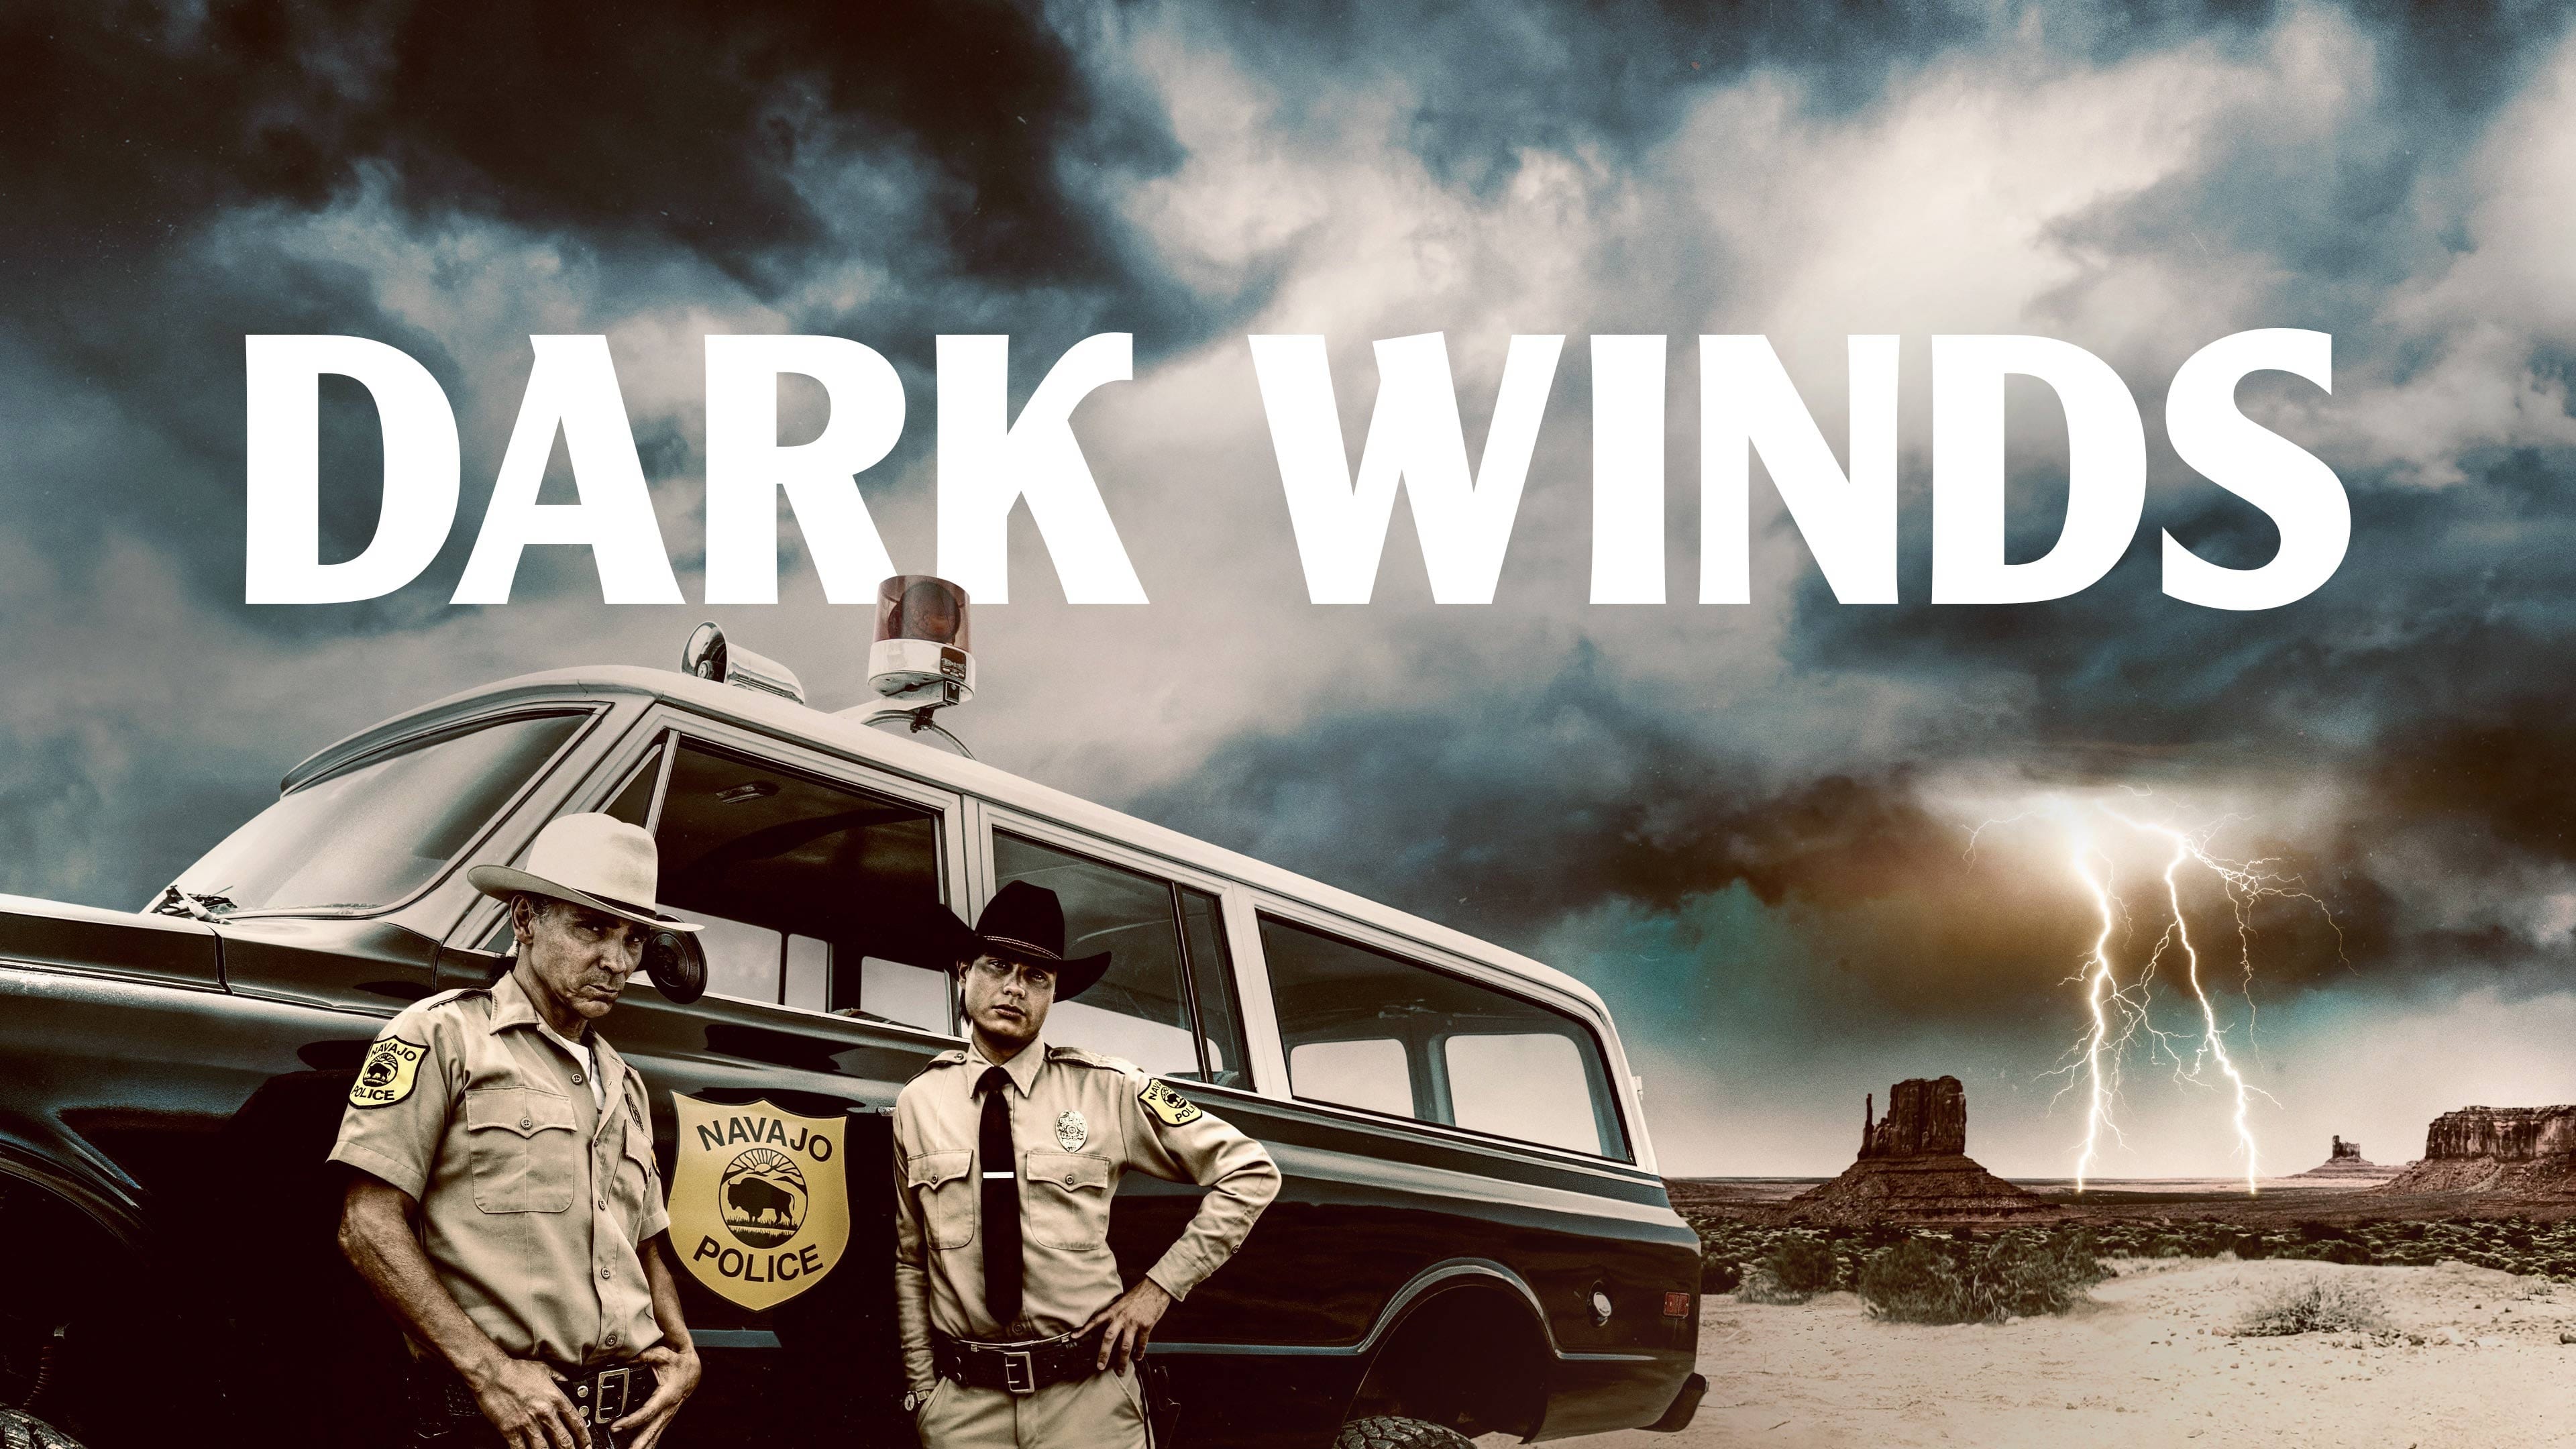 Dark Winds - Season 2